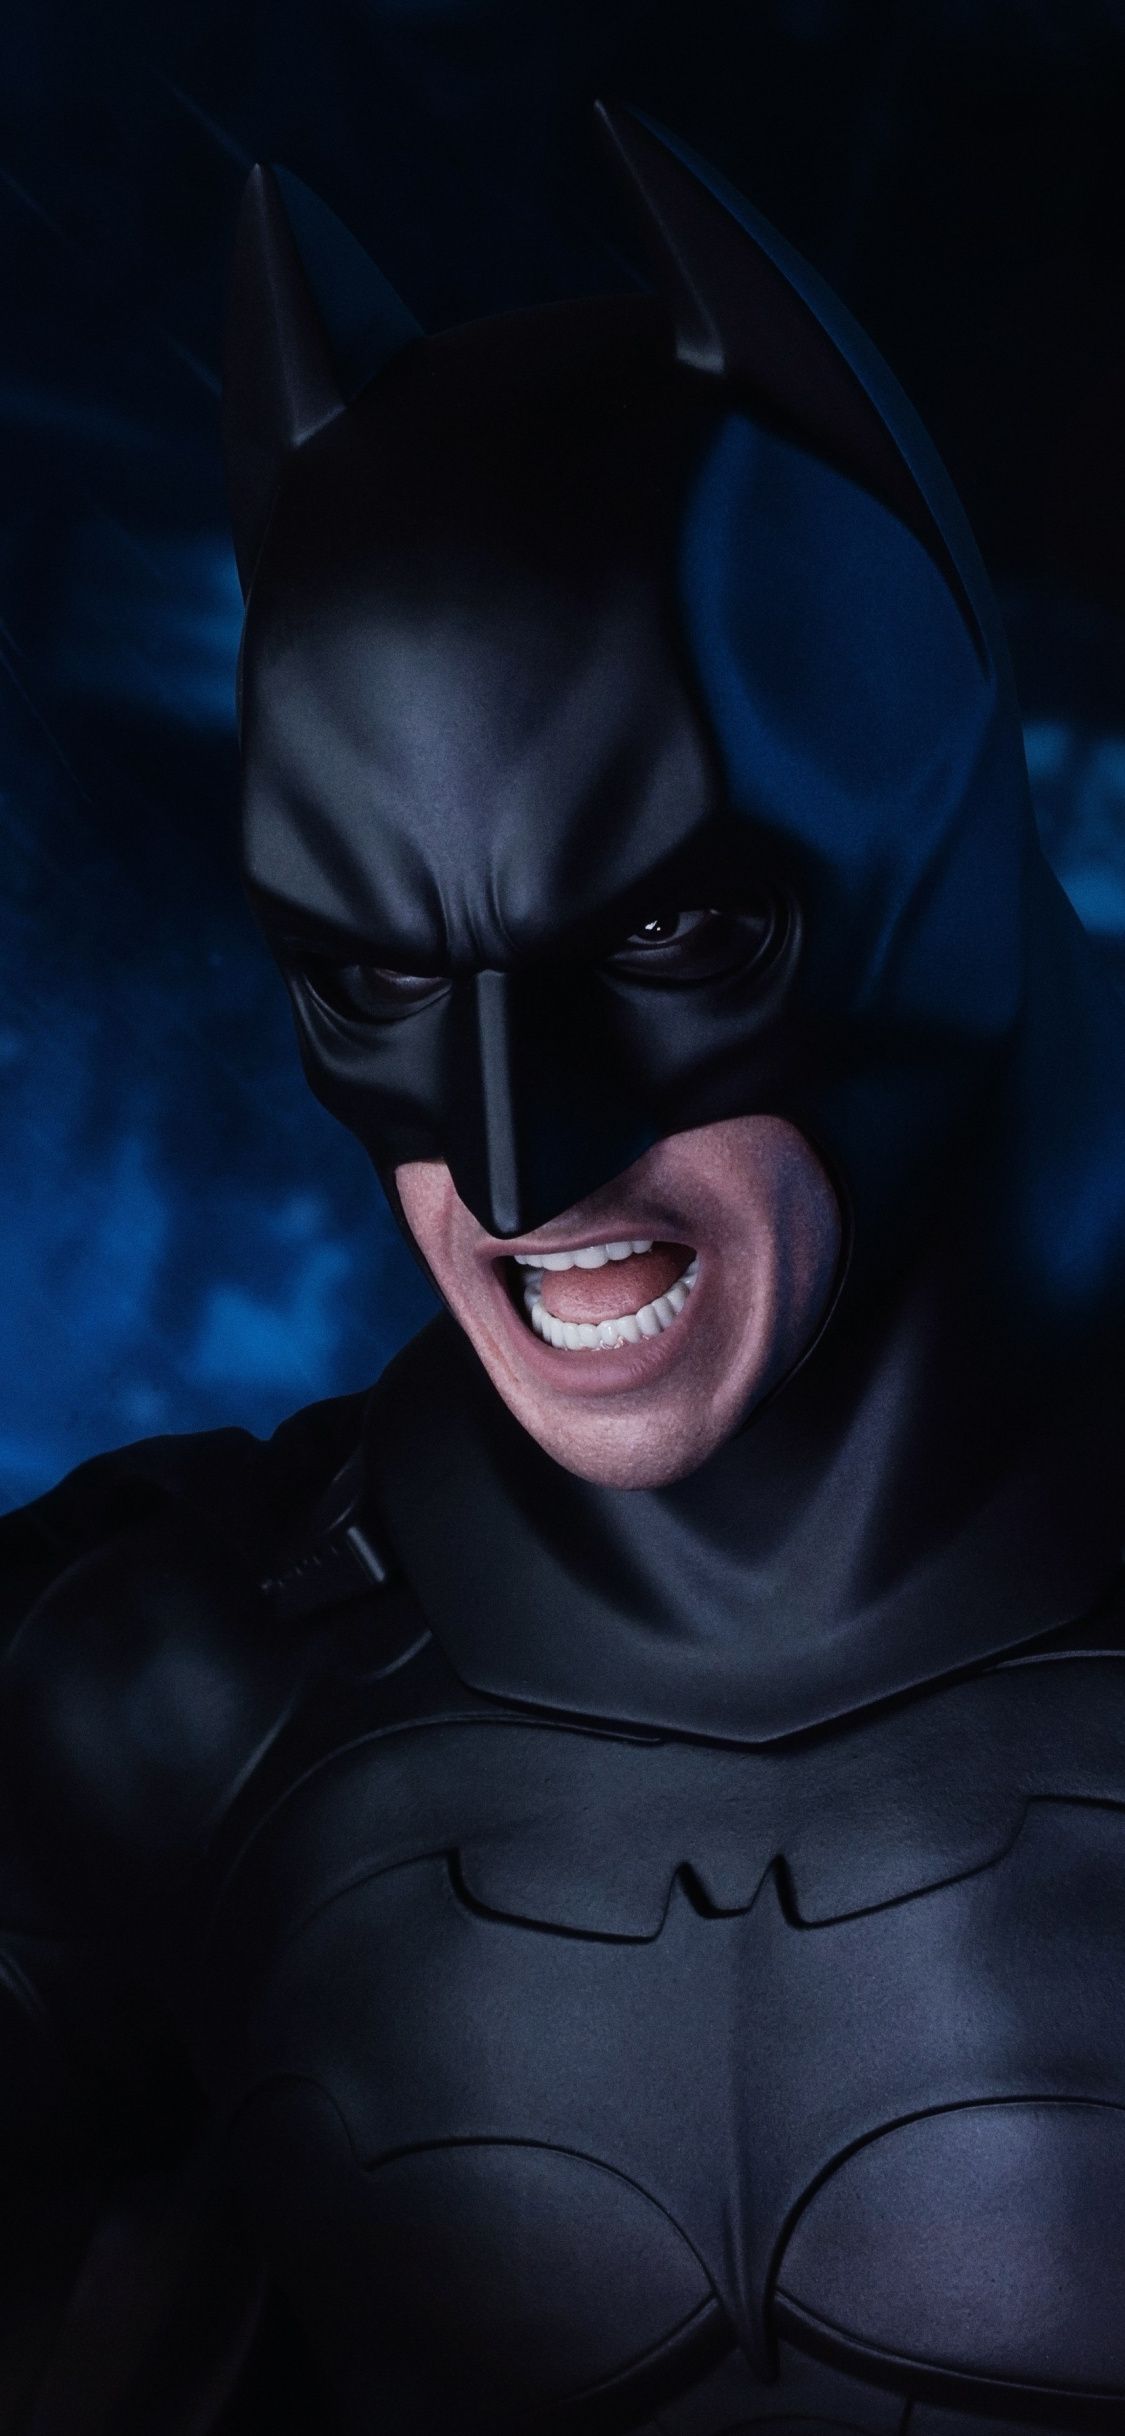 Movie, toy Figure, Batman Begins, angry batman wallpaper, 4295x HD image, picture, da3a62bb